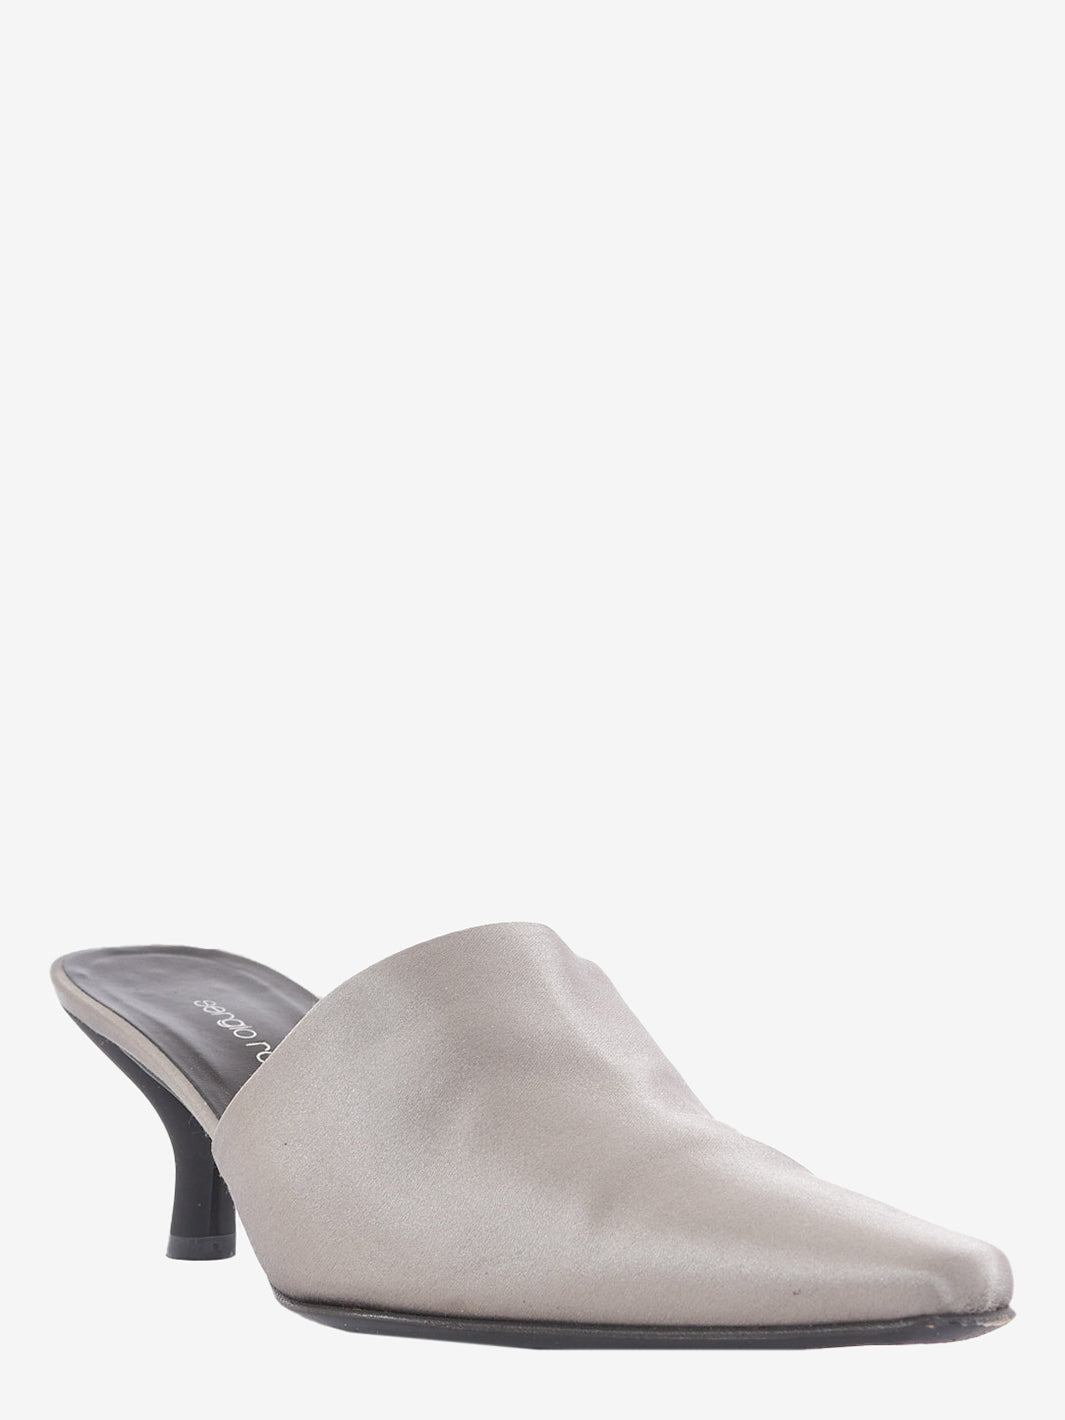 Sergio Rossi sandal in gray satin